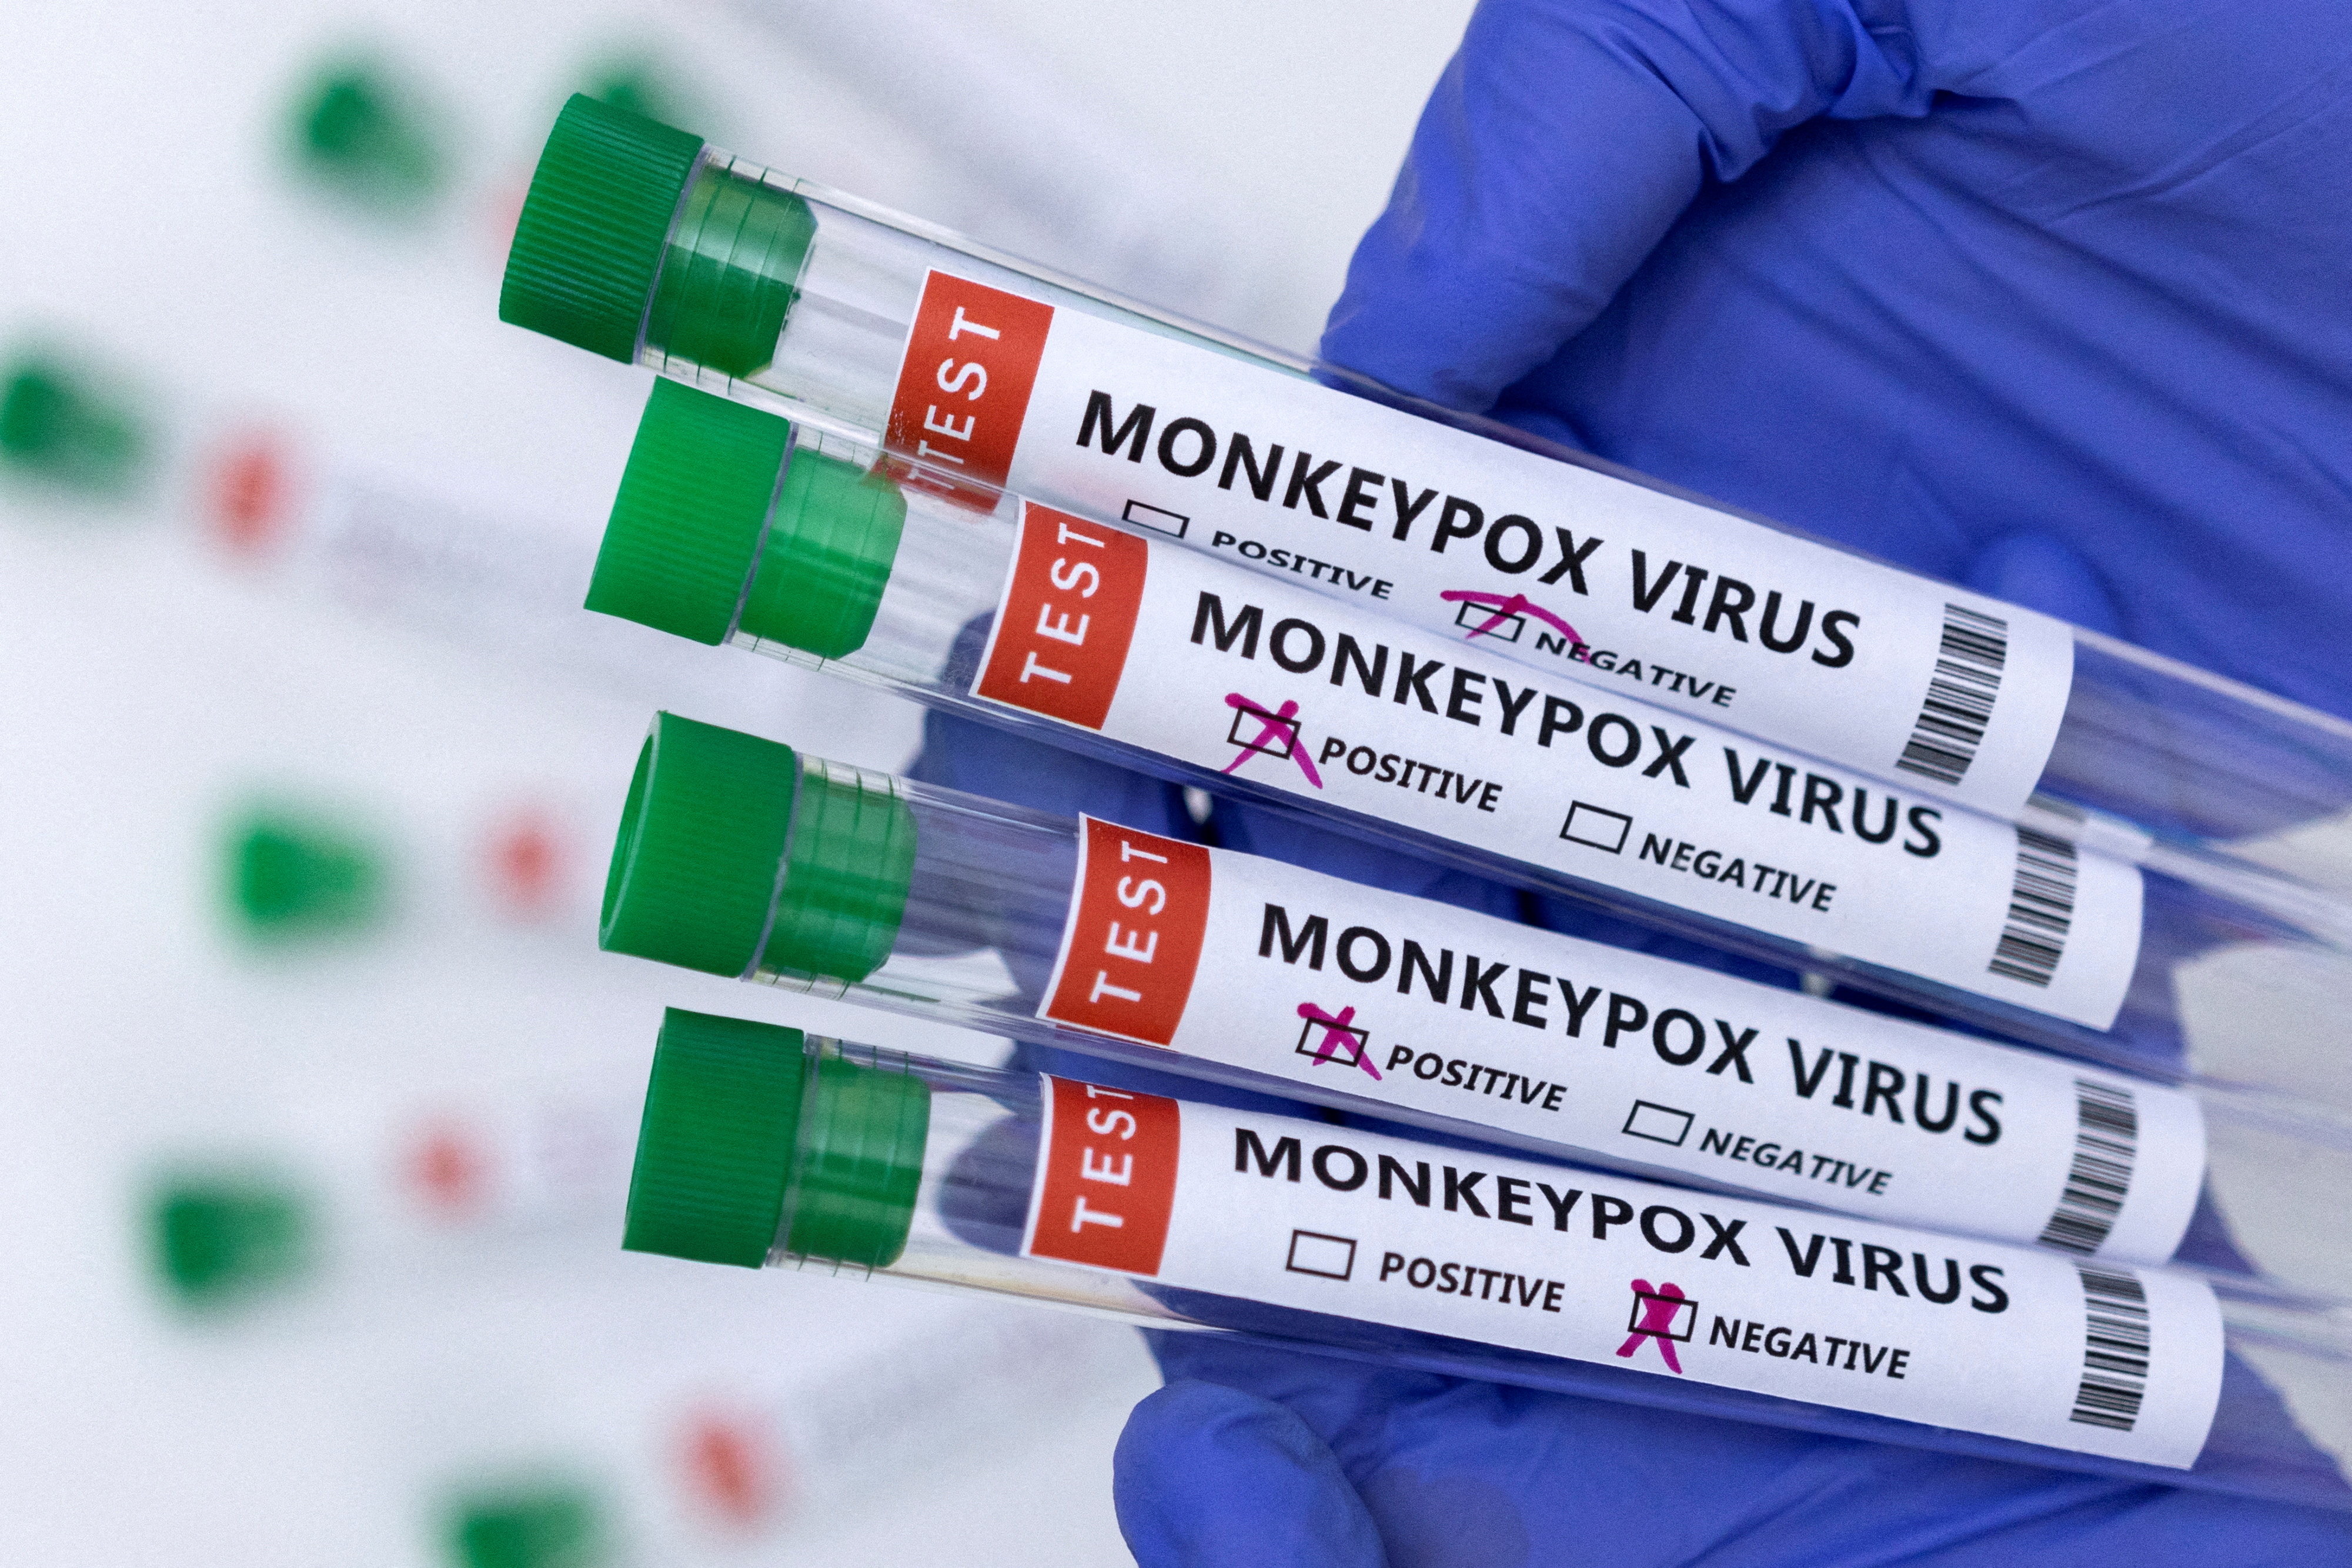 Illustration shows test tubes labelled "Monkeypox virus positive and negative\